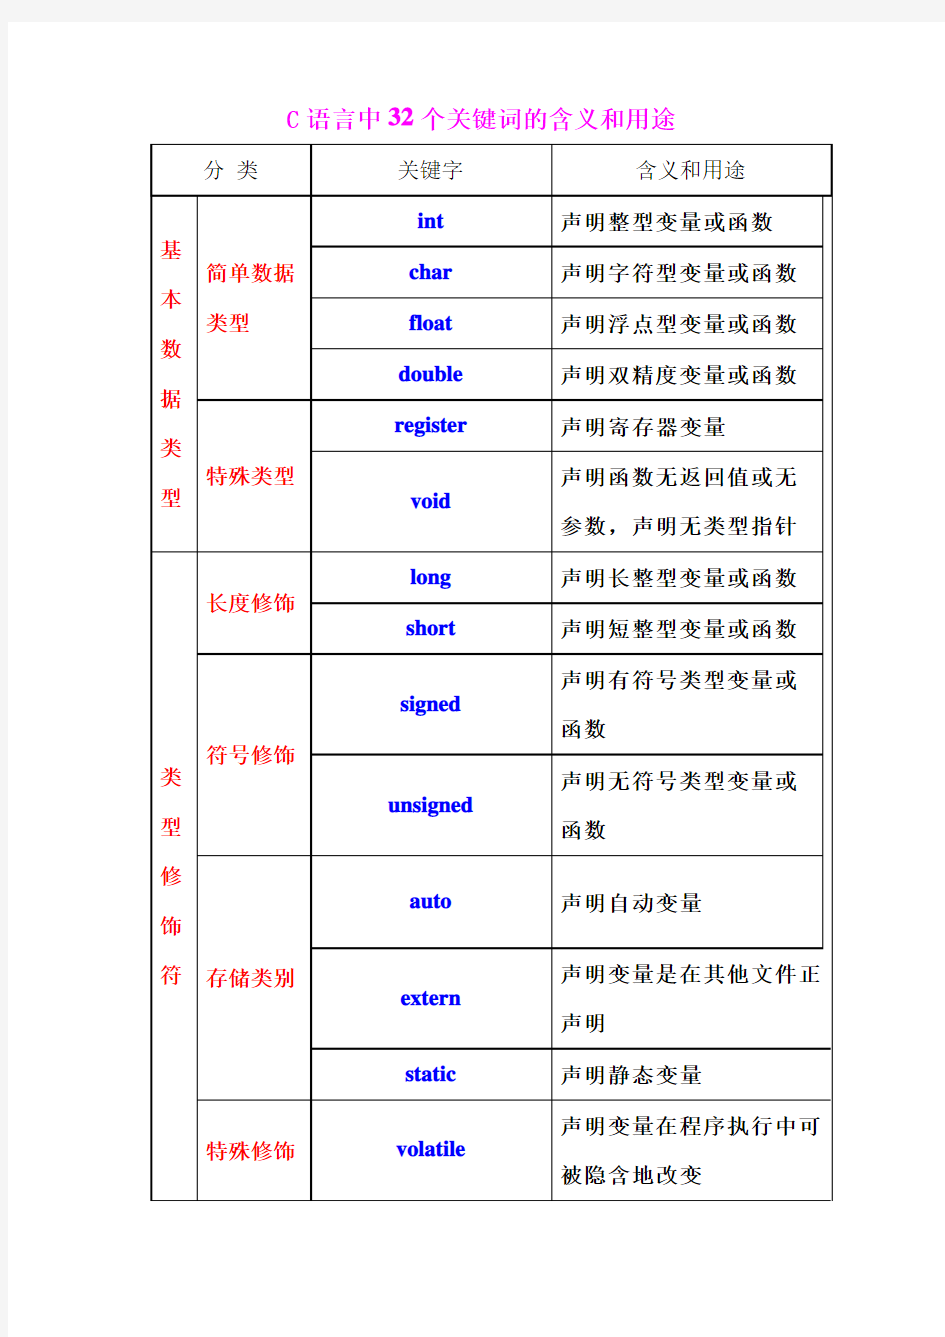 C语言中32个关键词的含义和用途